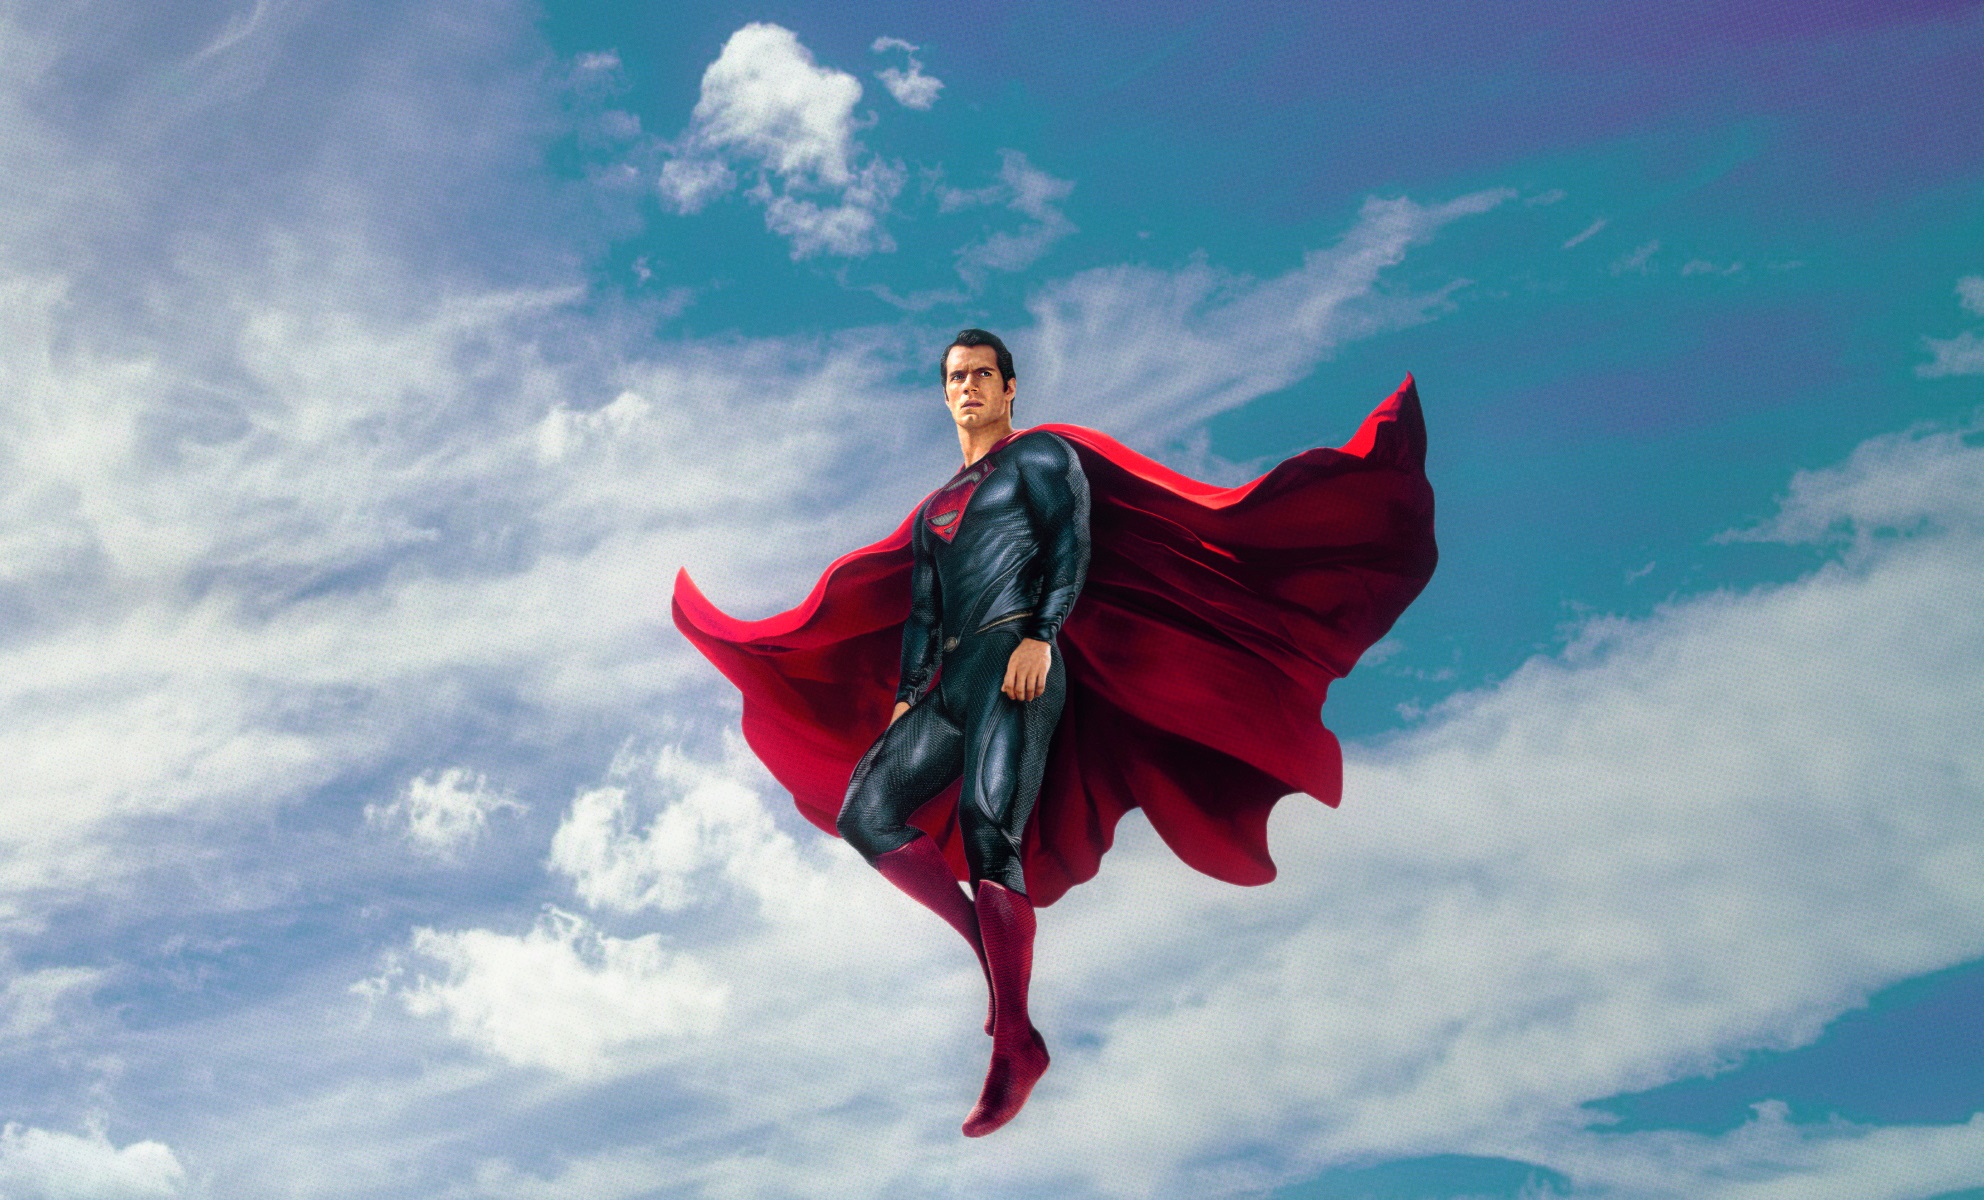 wallpaper keren 2017,superman,sky,fictional character,superhero,cloud